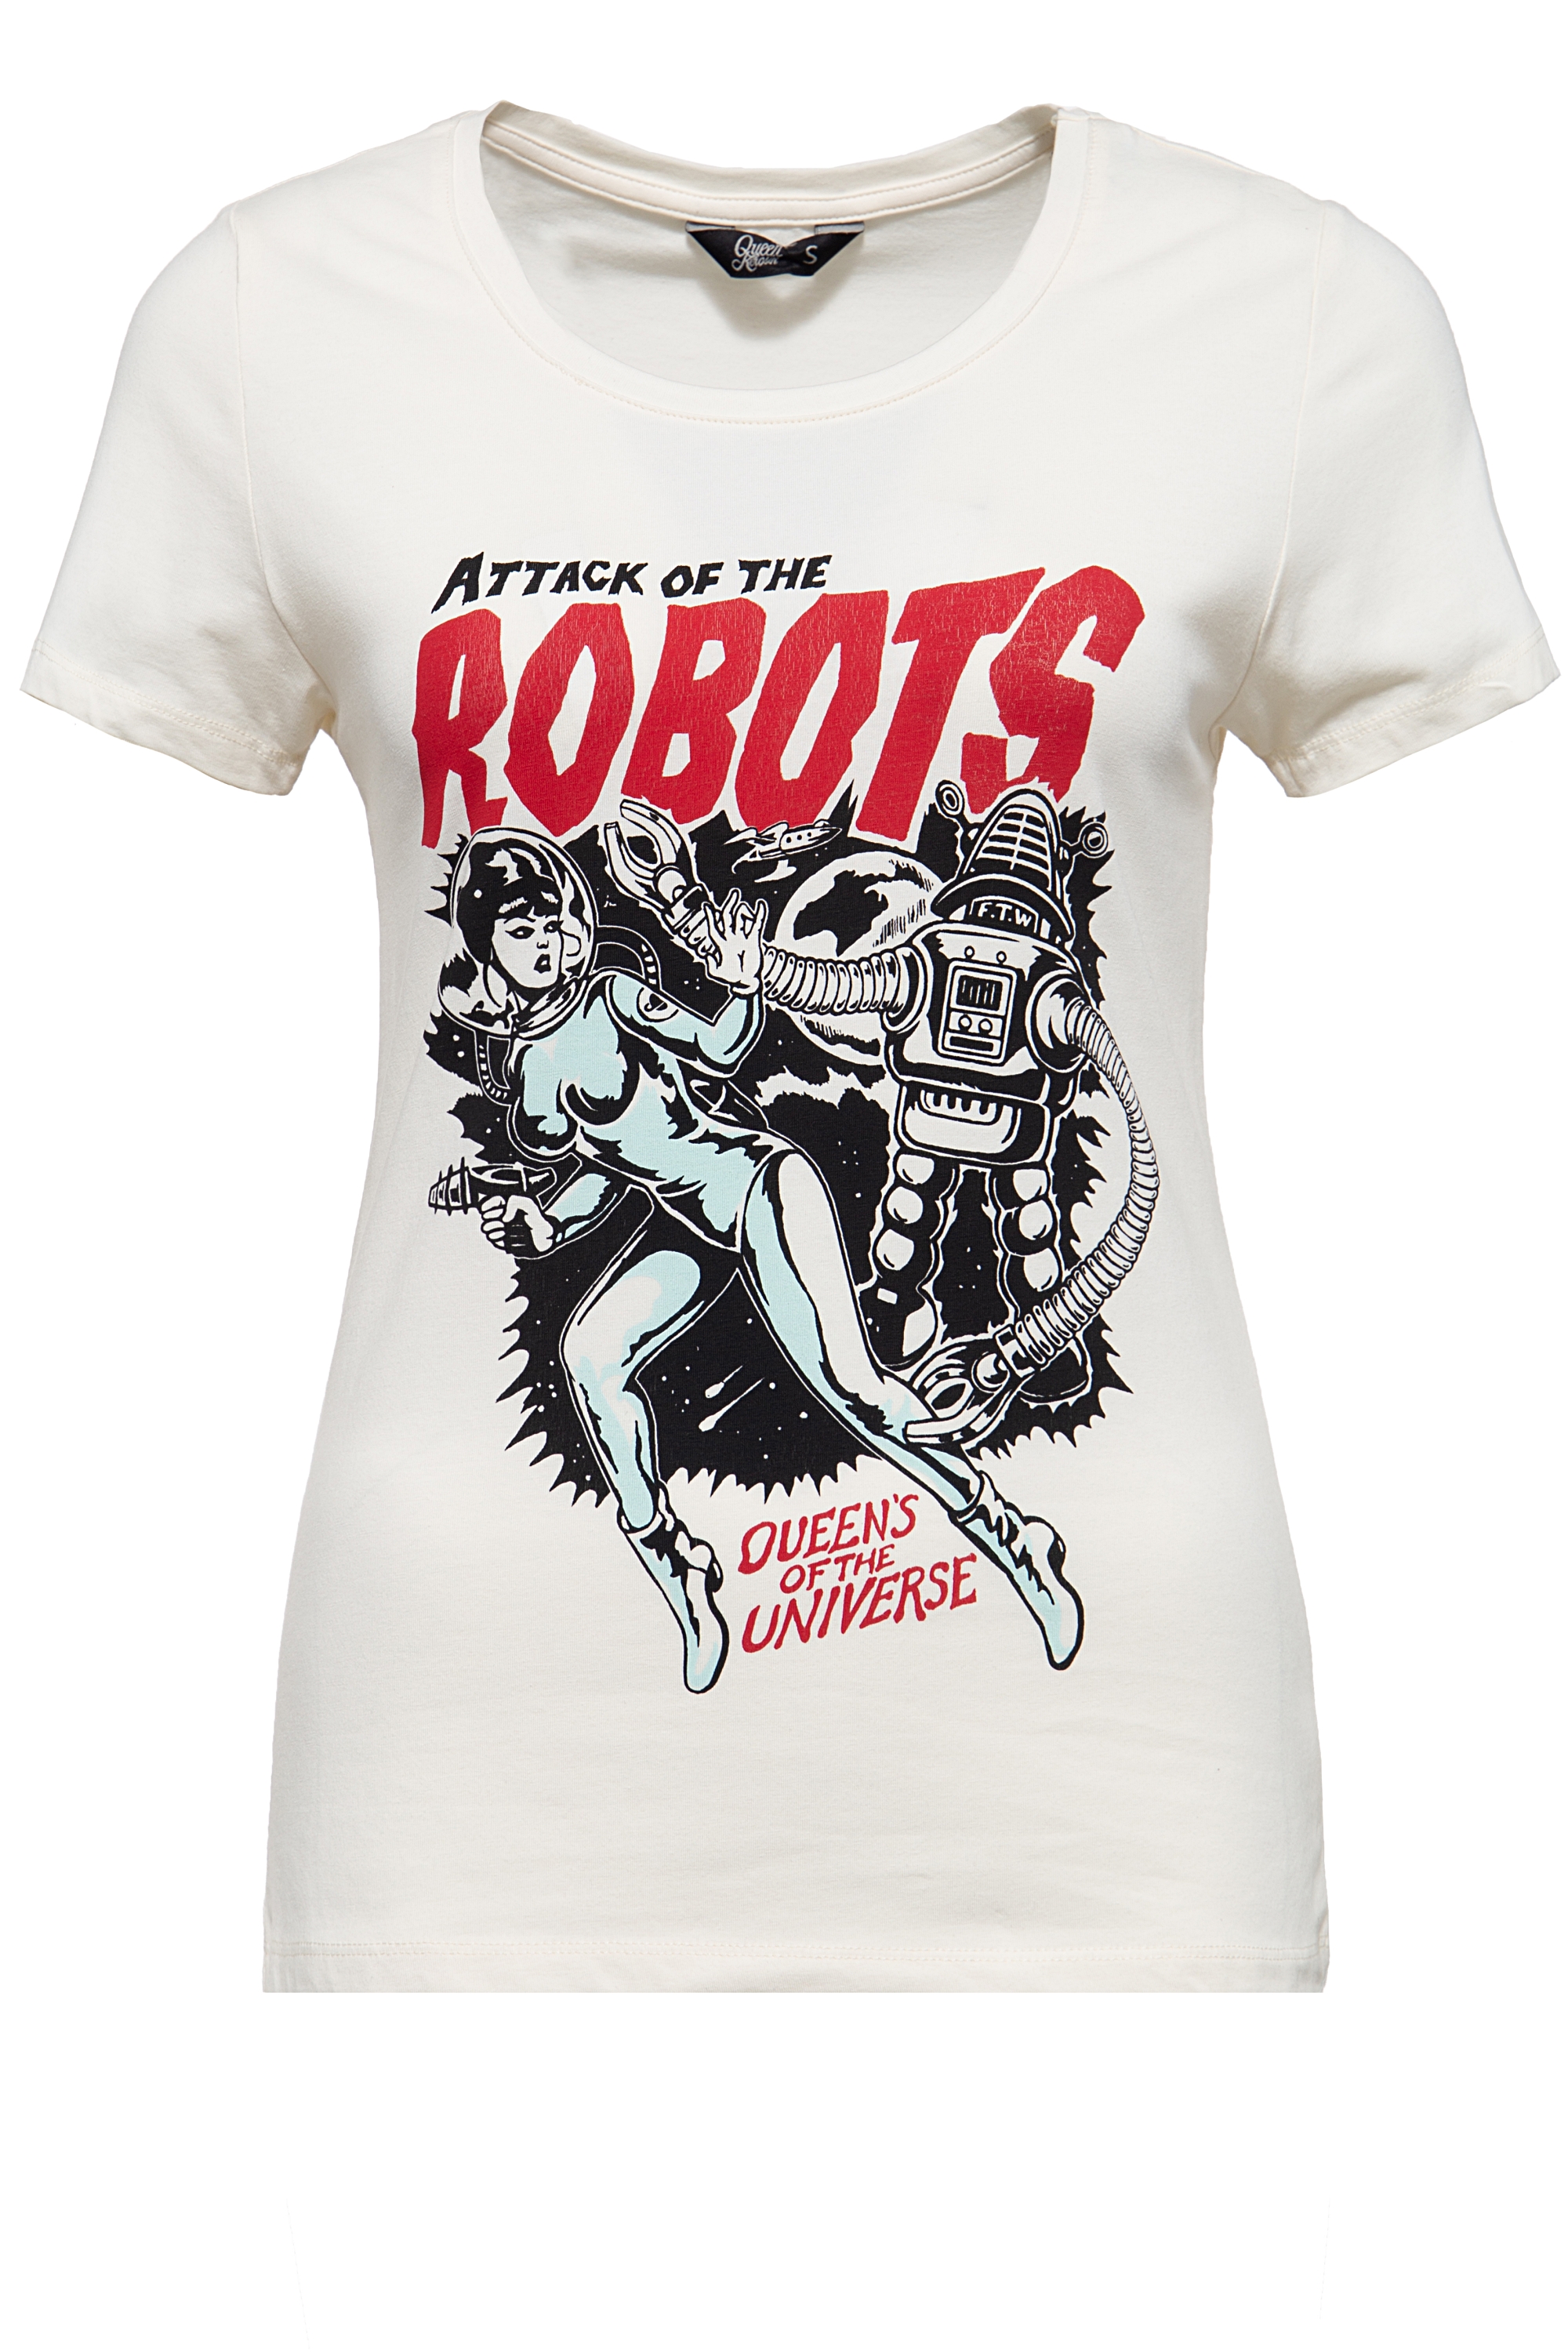 Queen Kerosin T-Shirt - Attack Of The Robots XS